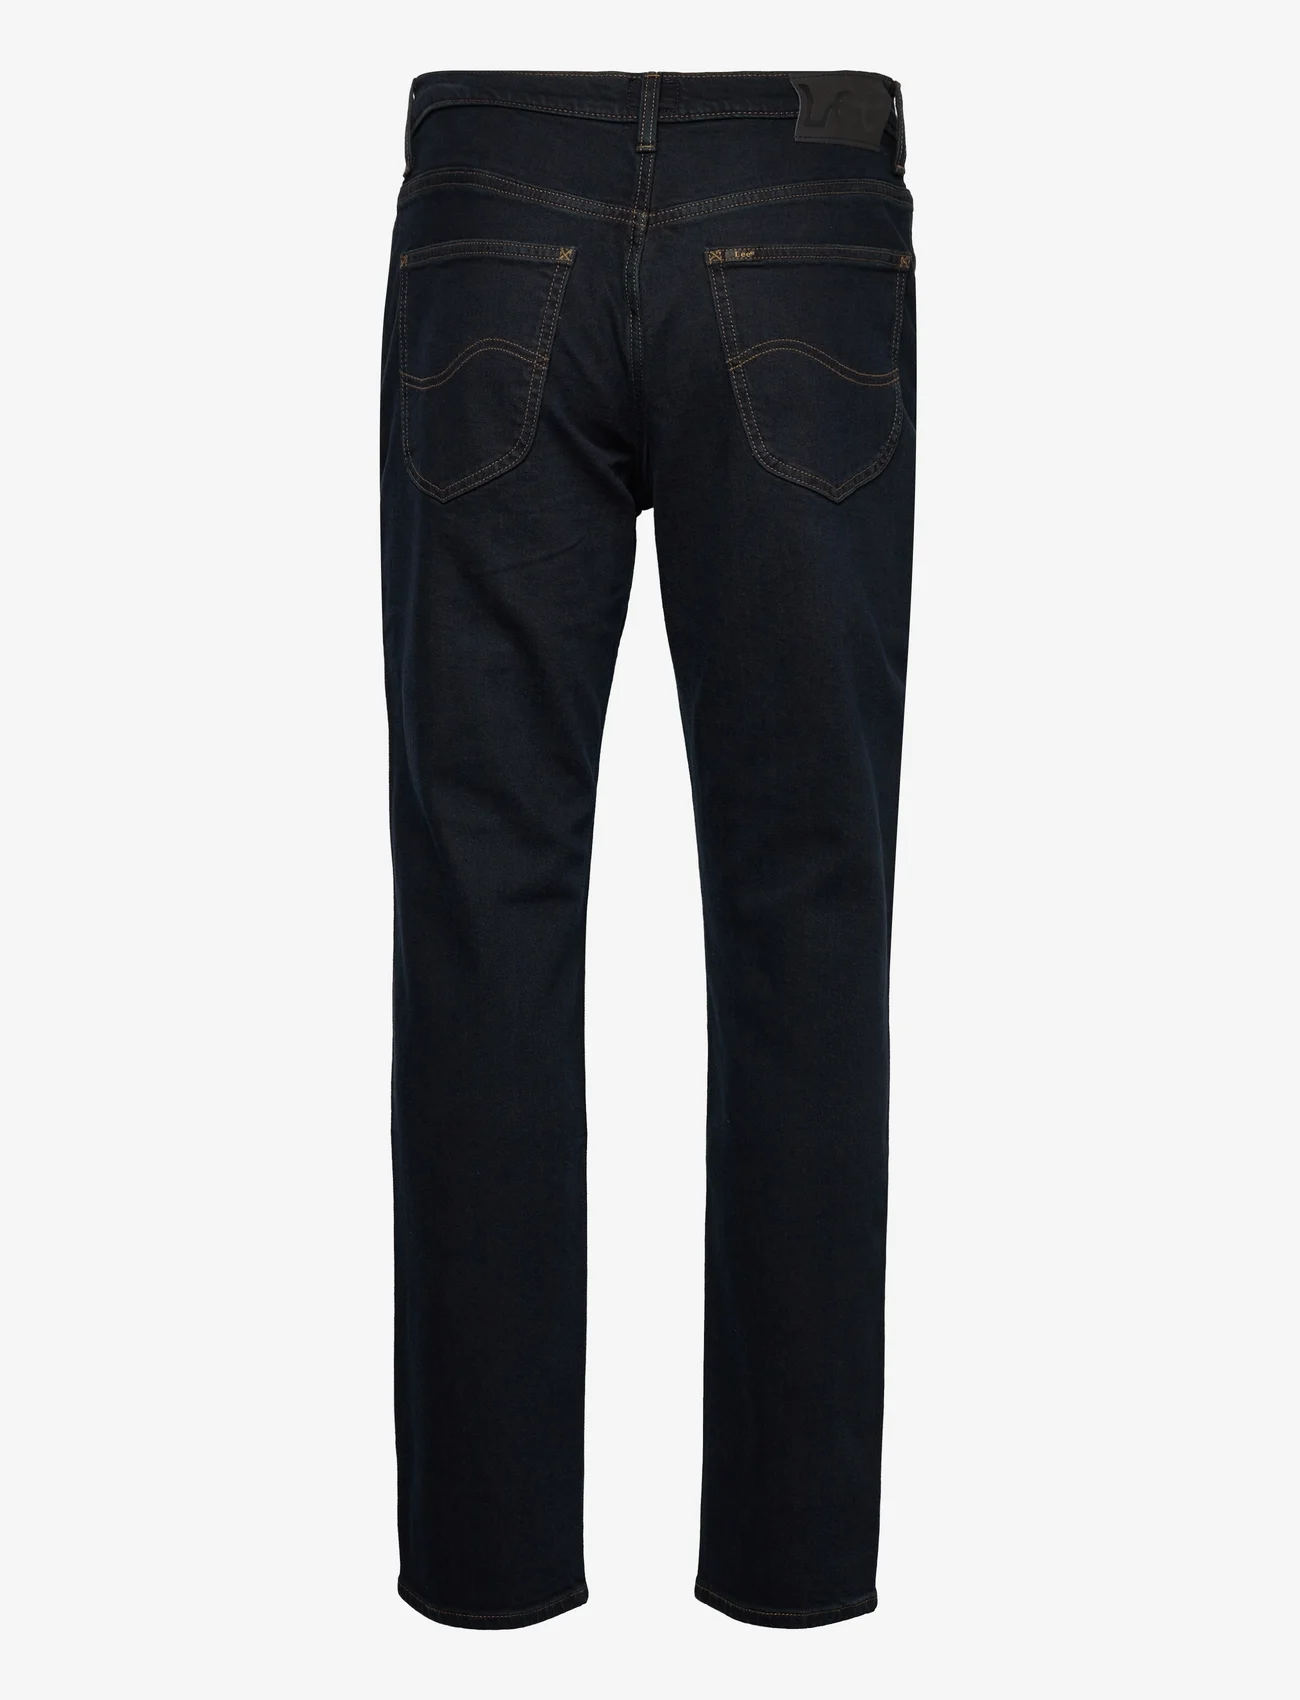 Lee Jeans - BROOKLYN STRAIGHT - Įprasto kirpimo džinsai - blue black - 1